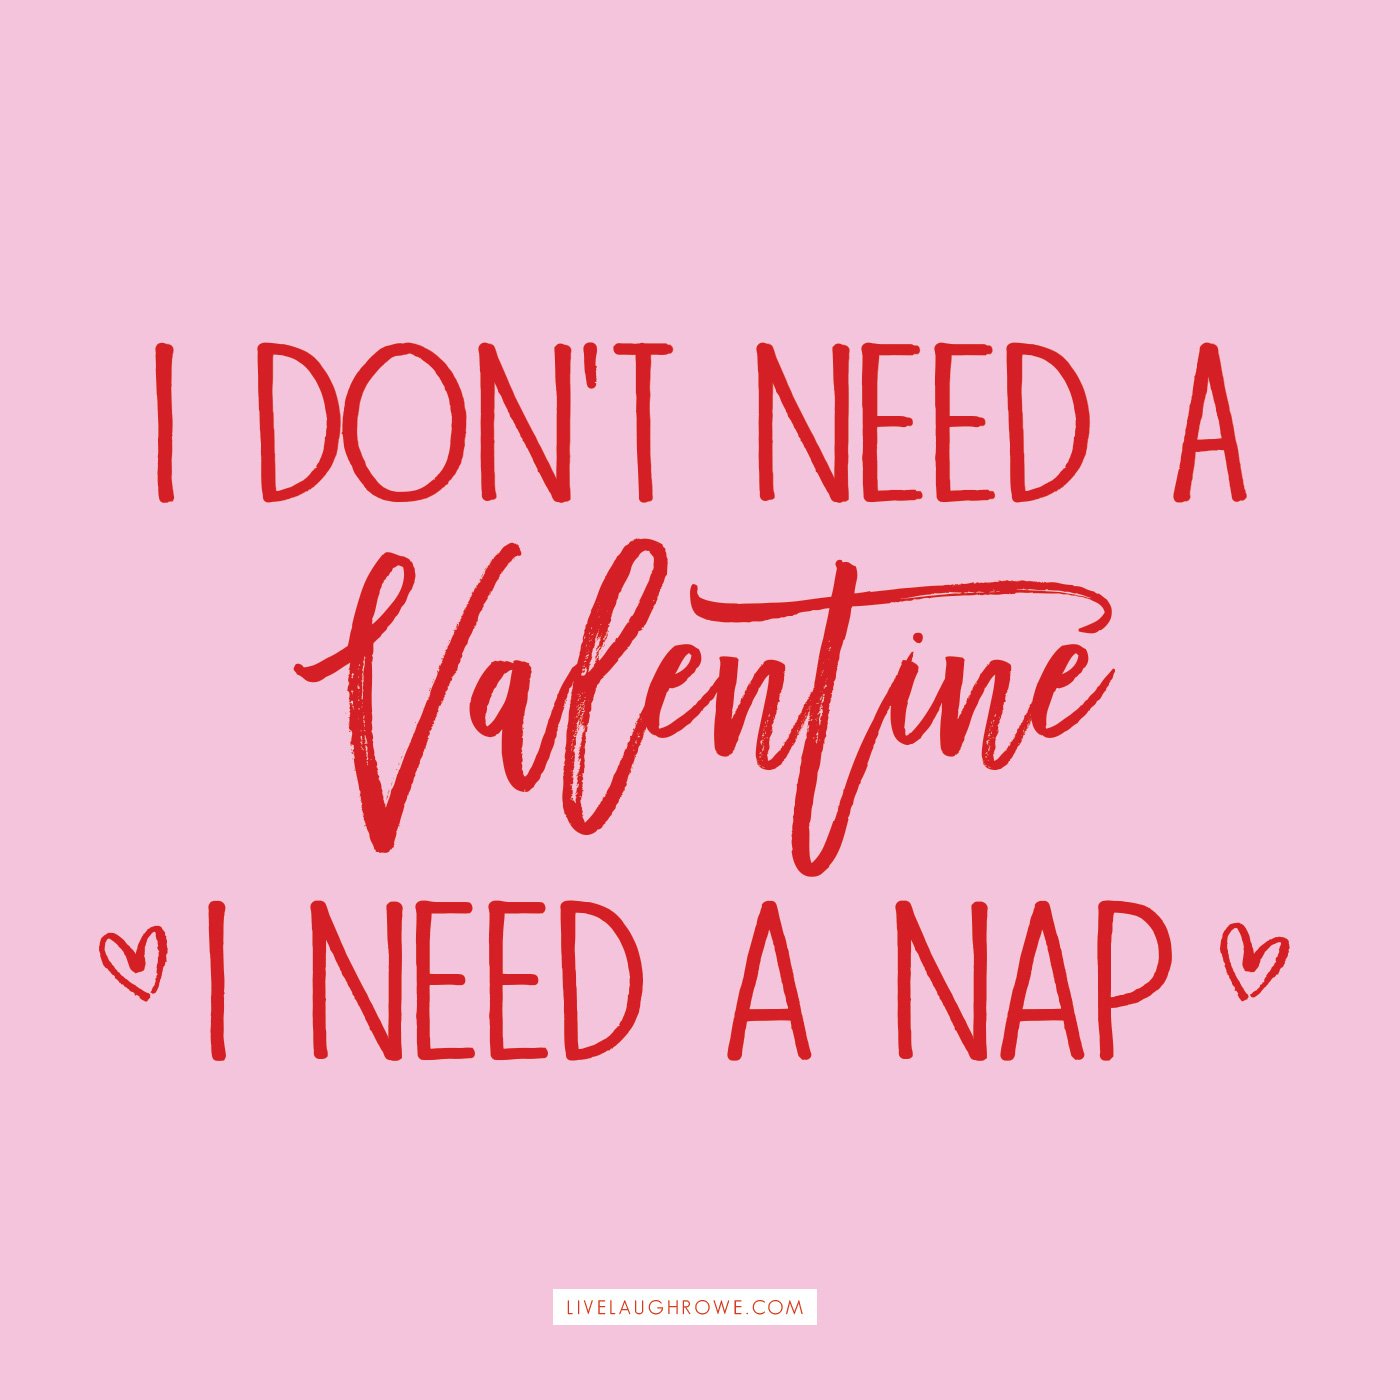 I don't need a Valentine, I need a nap quote